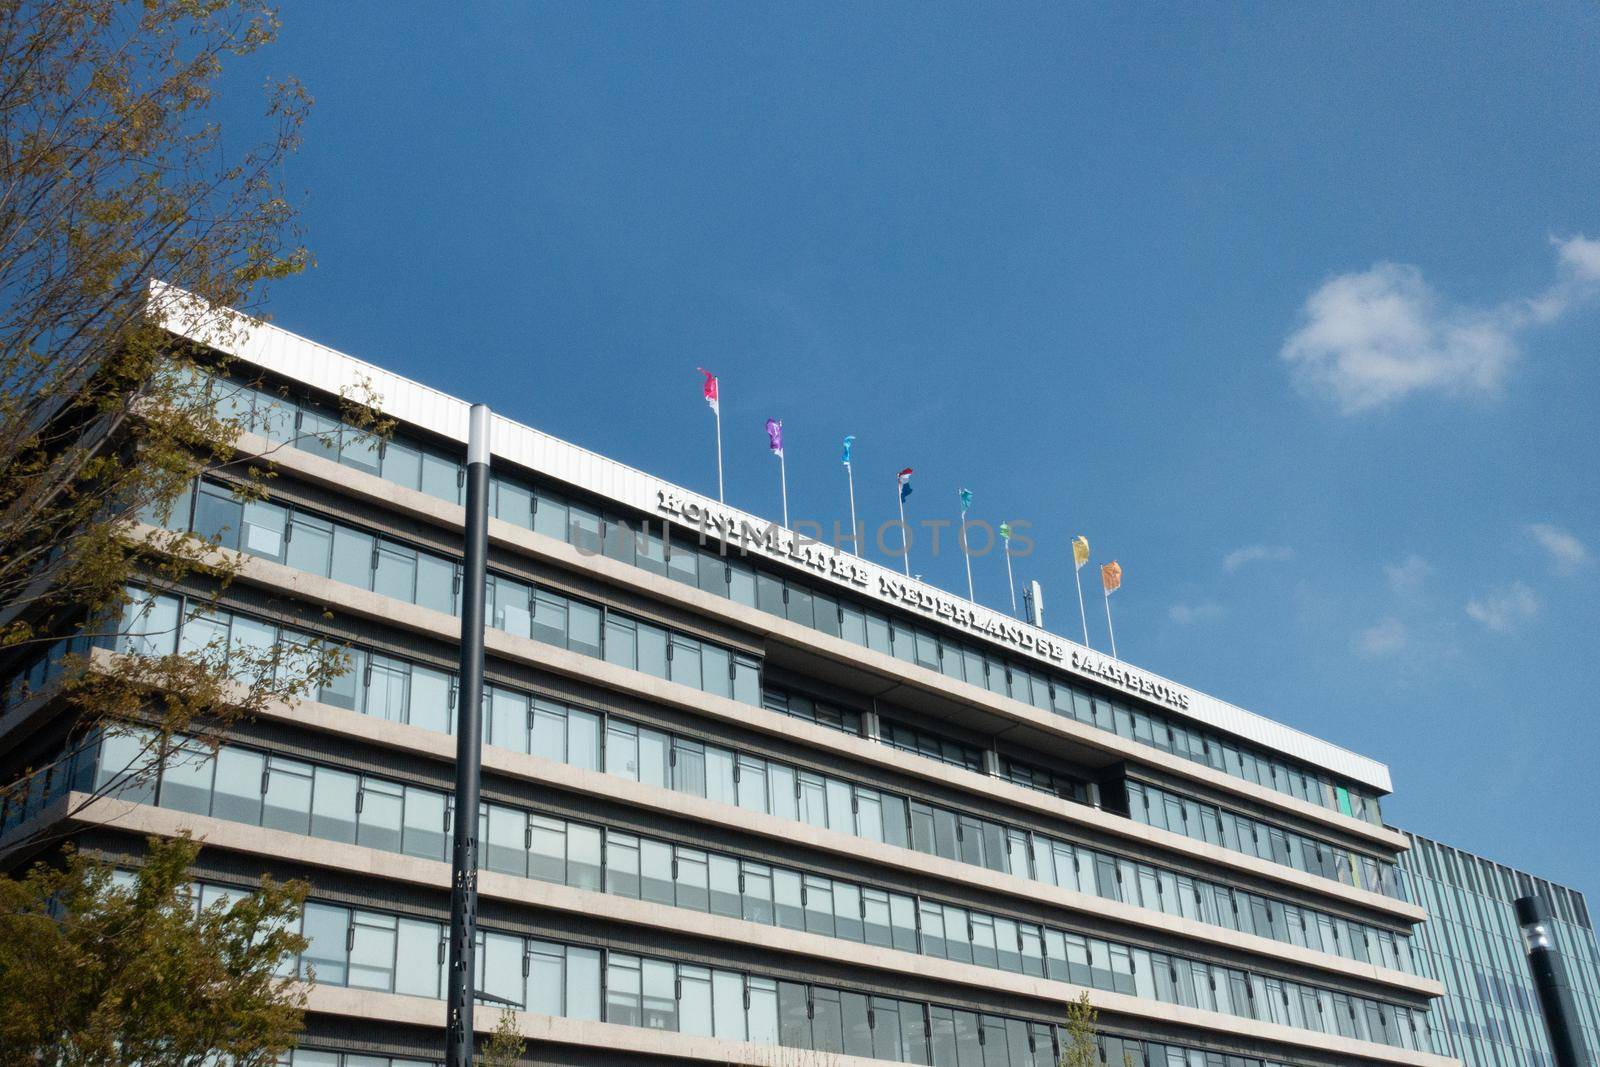 UTRECHT / NETHERLANDS - APRIL 15, 2019: Facade with flags and blue sky Dutch conference centre Jaarbeurs by LeoniekvanderVliet